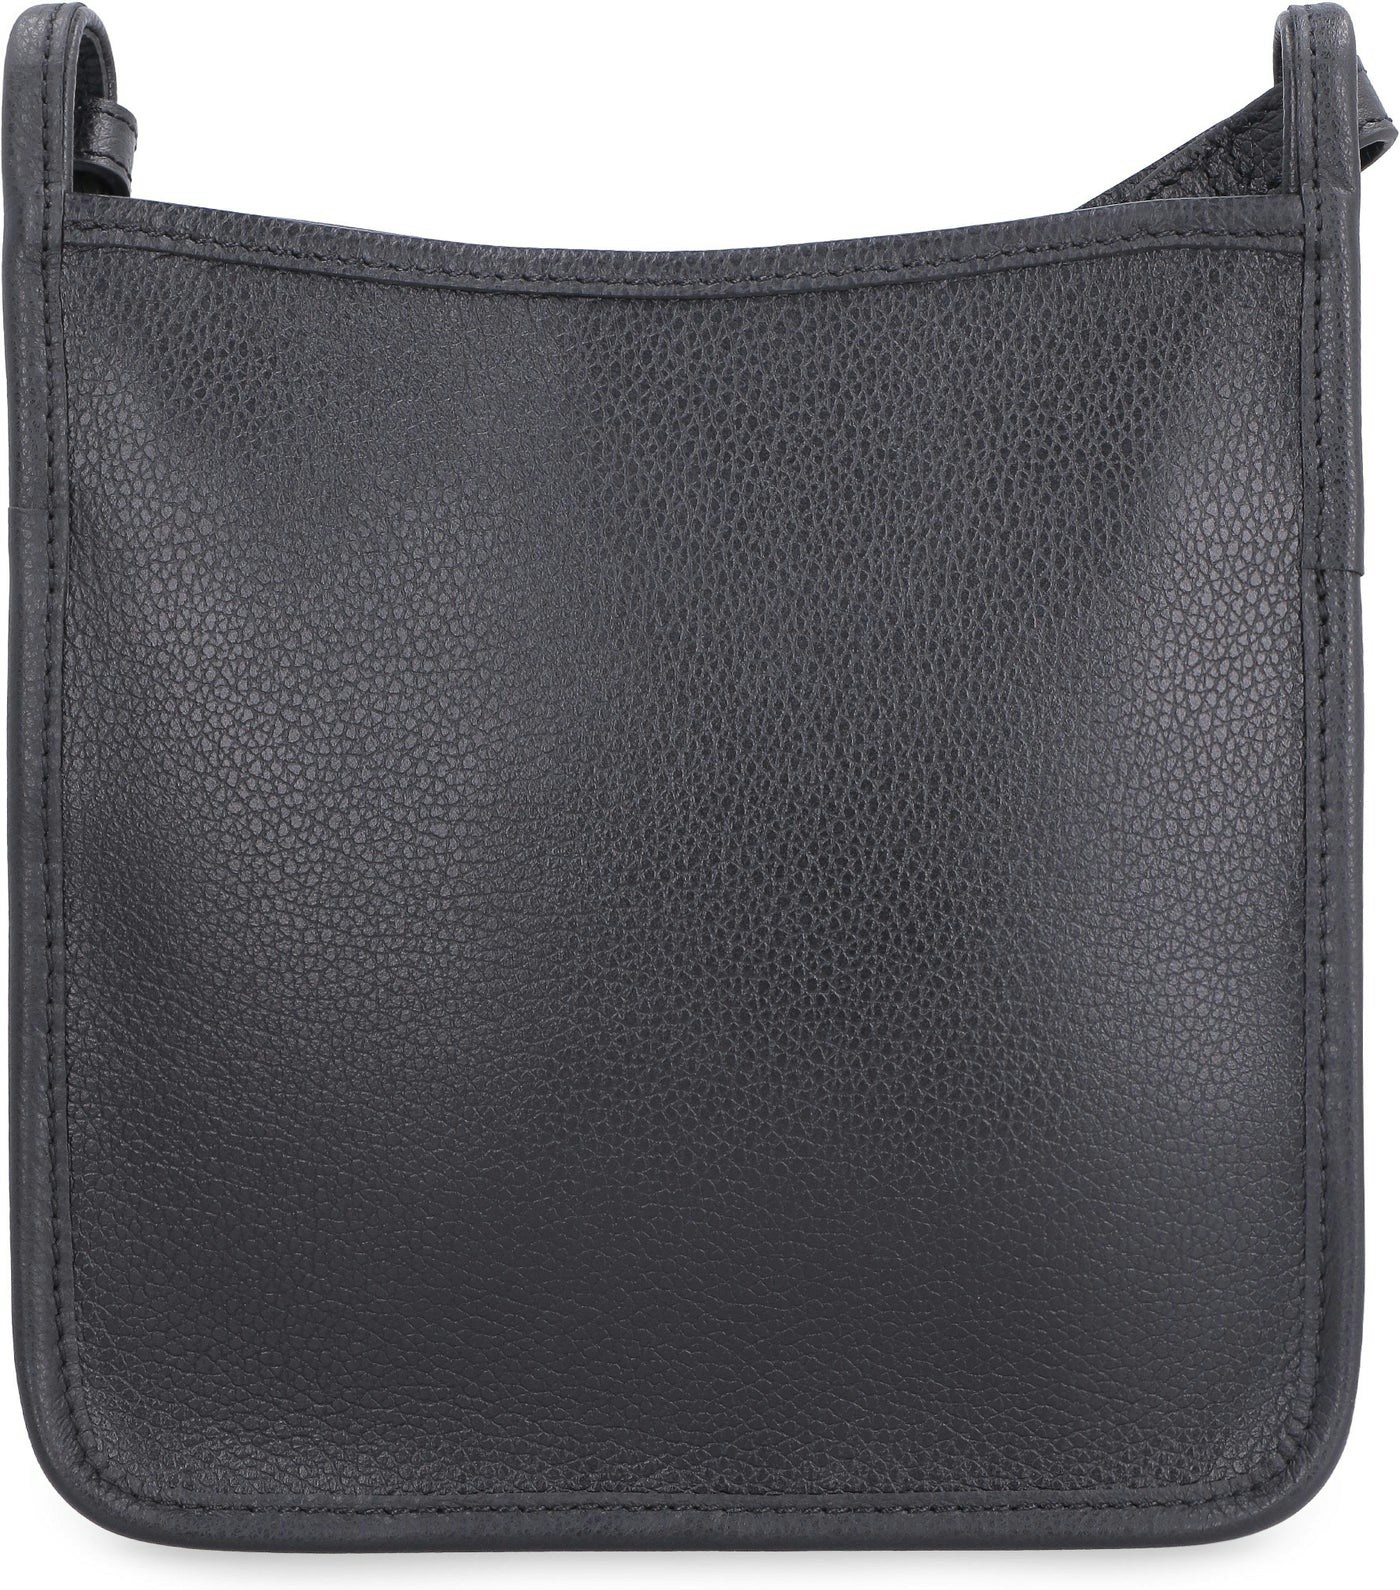 Le Foulonné S Crossbody bag Black - Leather (10138021001)